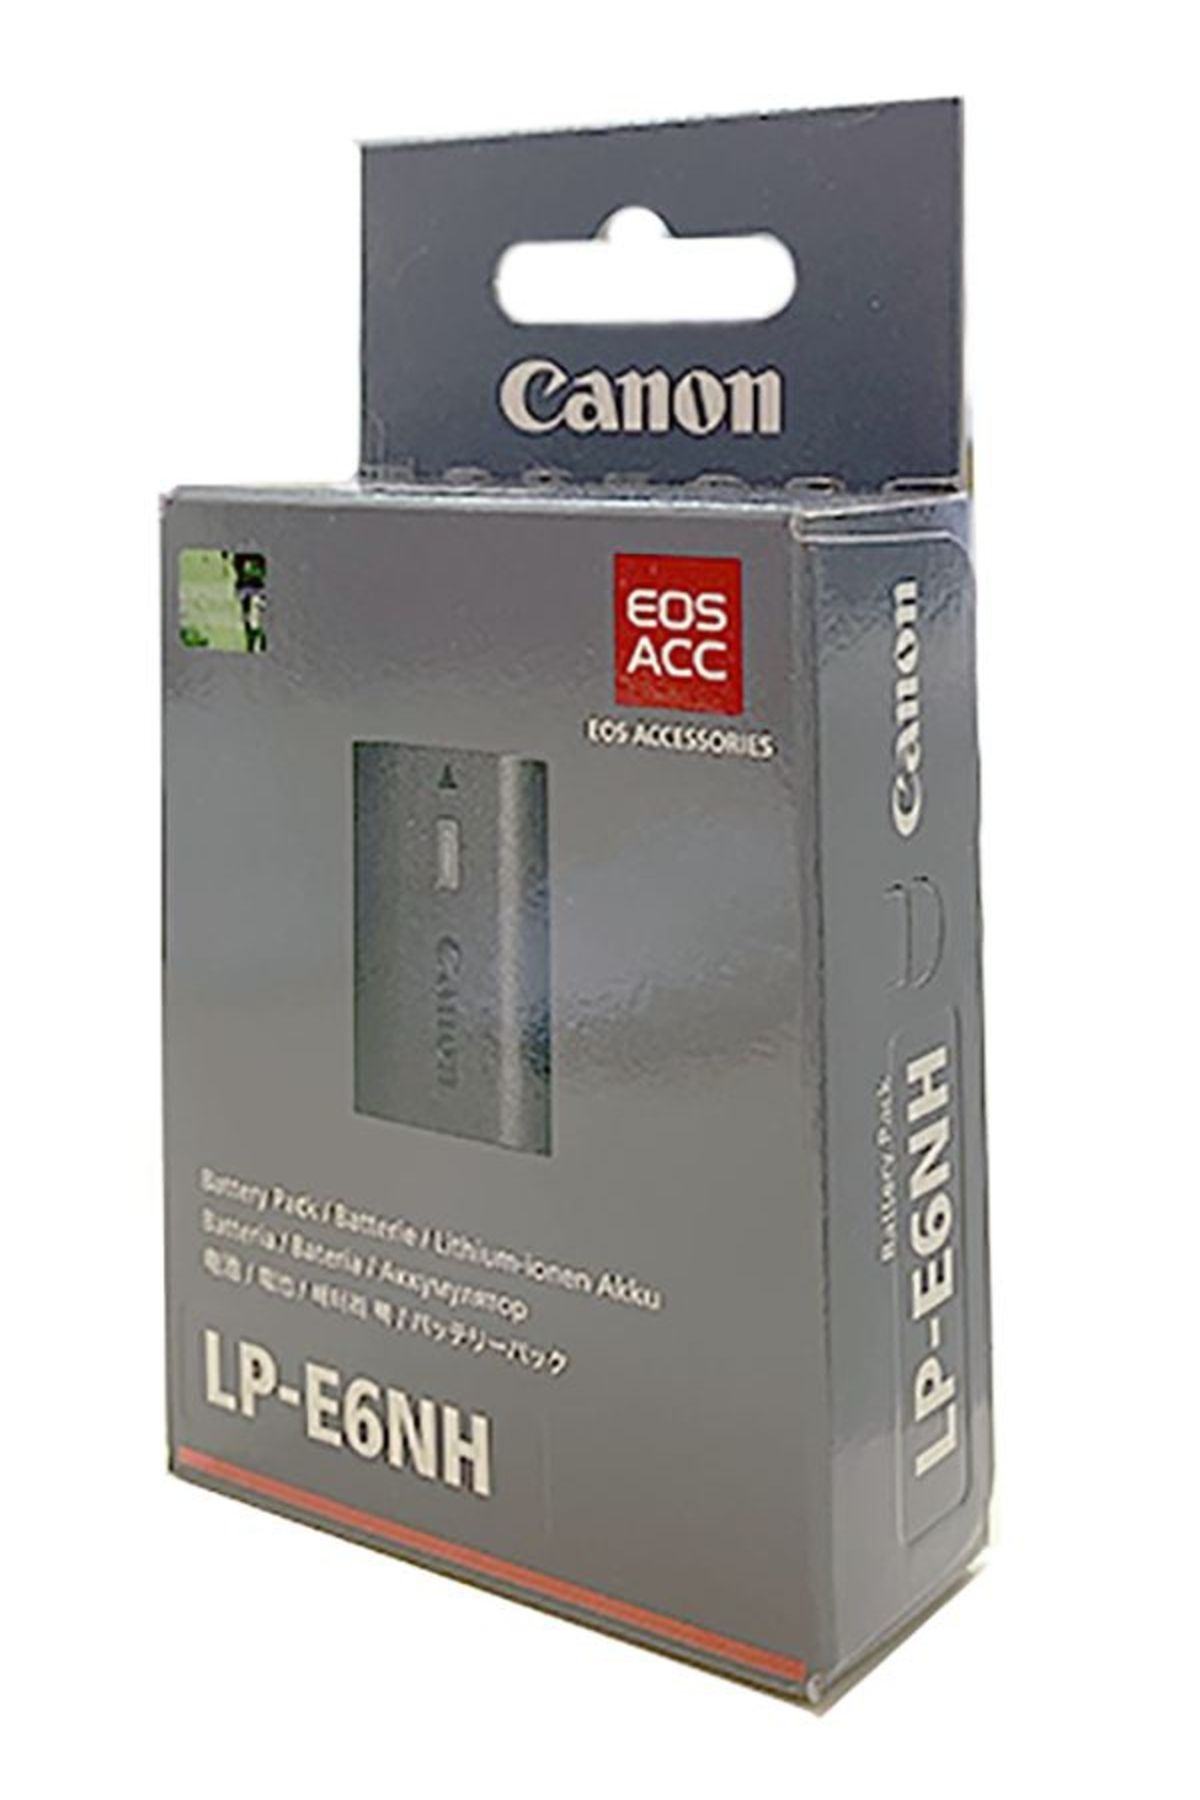 Canon batarya (pil) lp-e17